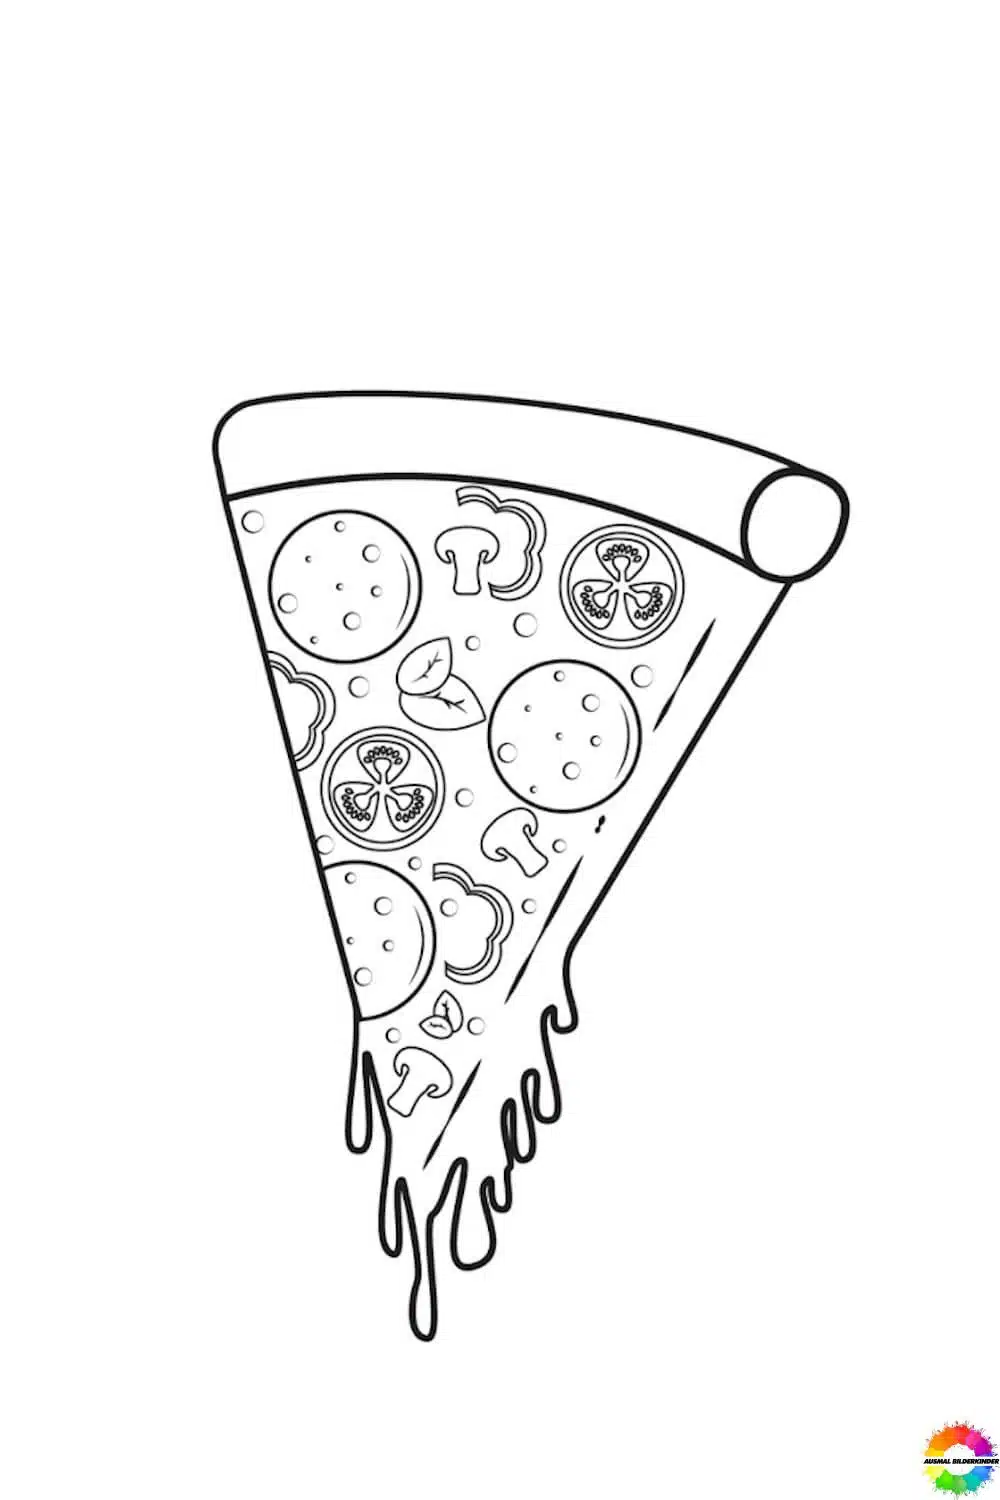 Pizza 26